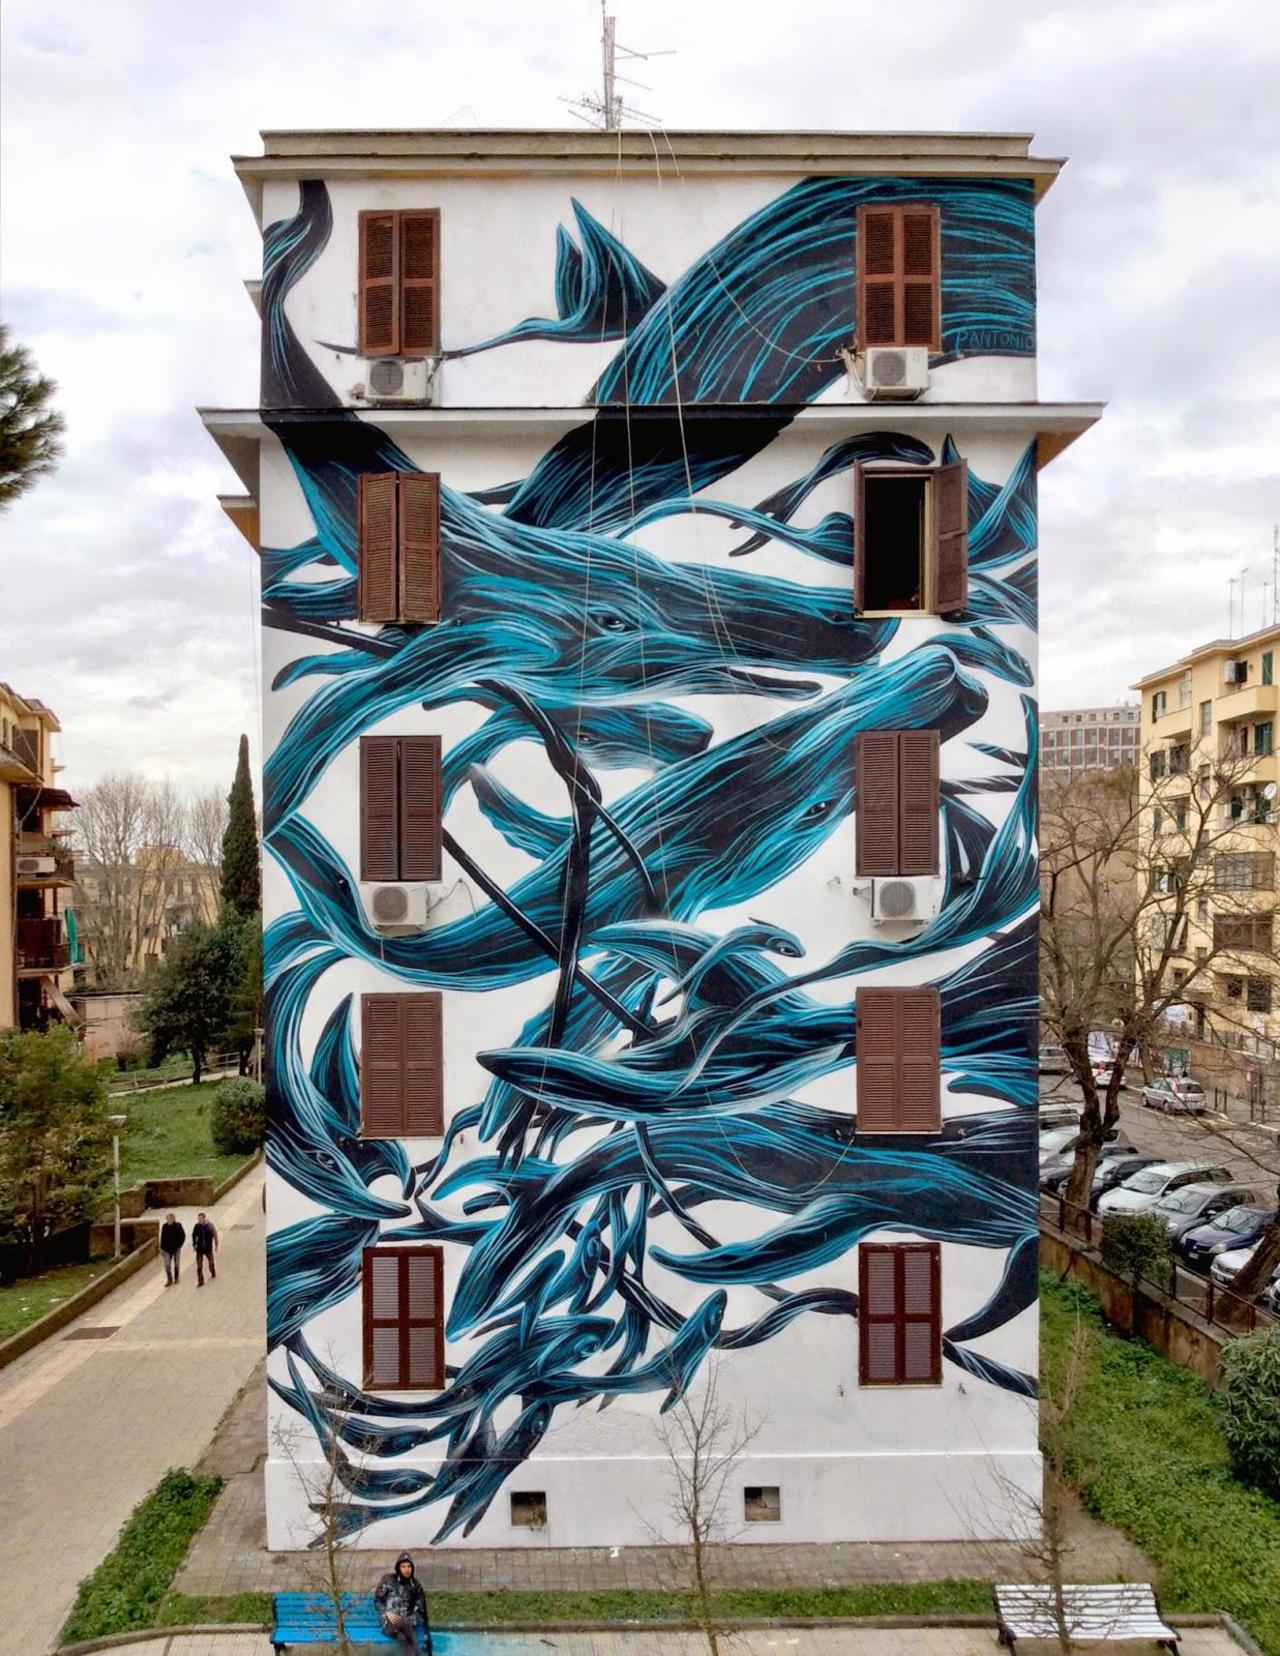 Streetart by Pantonio in Rome, Italy

#streetart #mural #art #graffiti #urbanart http://t.co/wqcoukjPuo